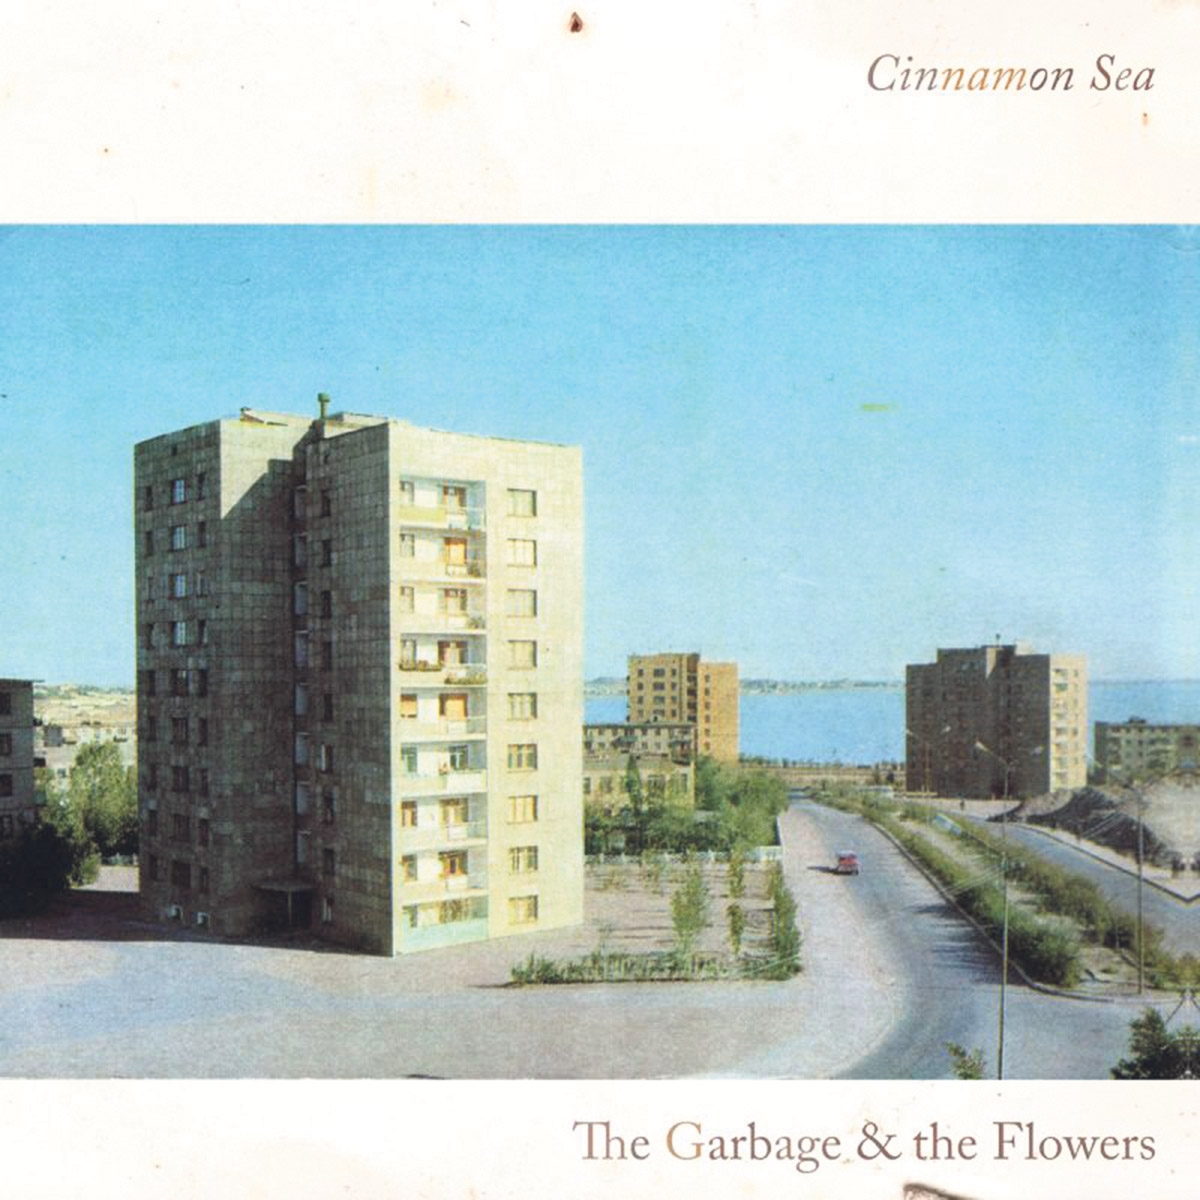 The Garbage & the Flowers: Cinnamon Sea